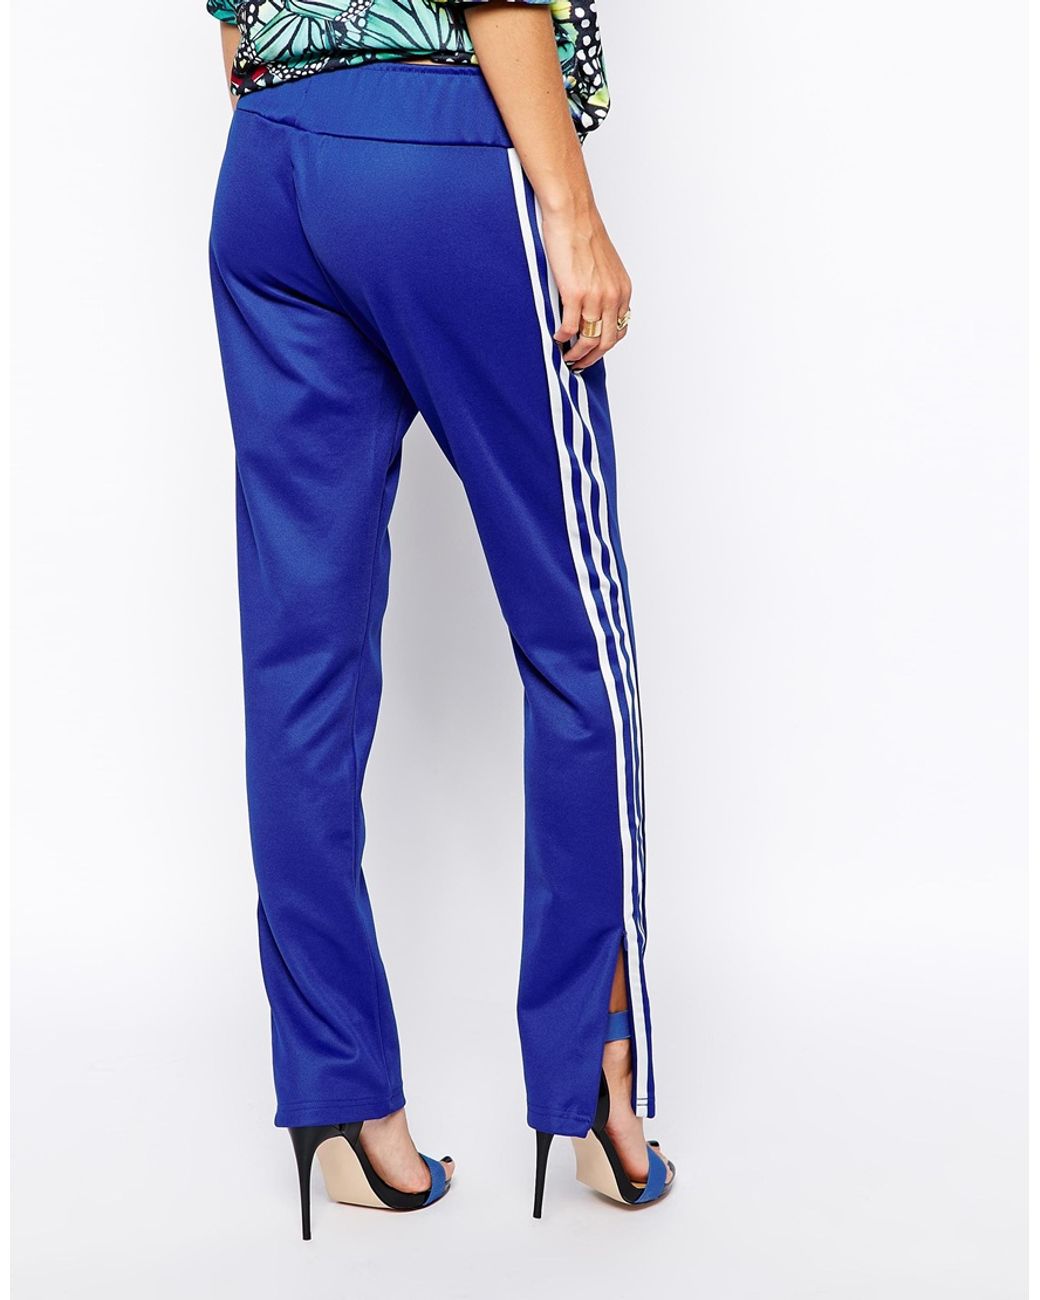 adidas Originals 3 Stripe Sweat Pants in Blue